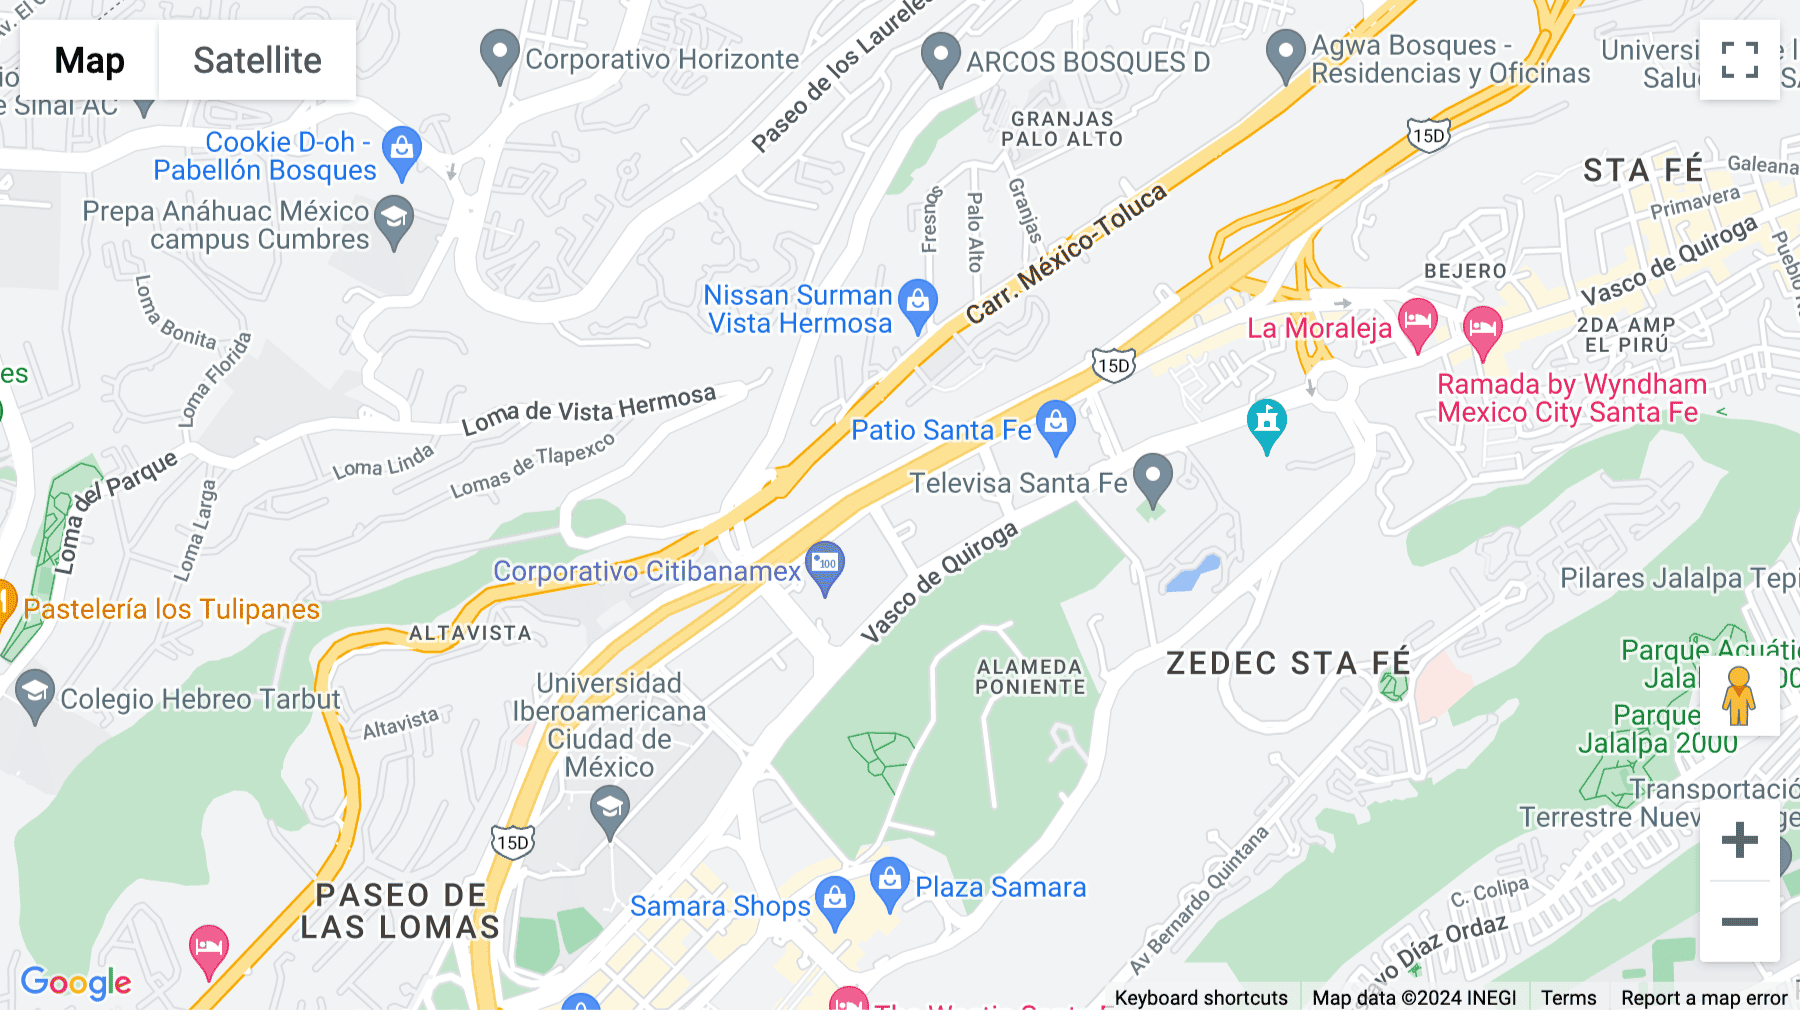 Click for interative map of 1015 Paseo de la Reforma, Mexico City, Mexico, Mexico City